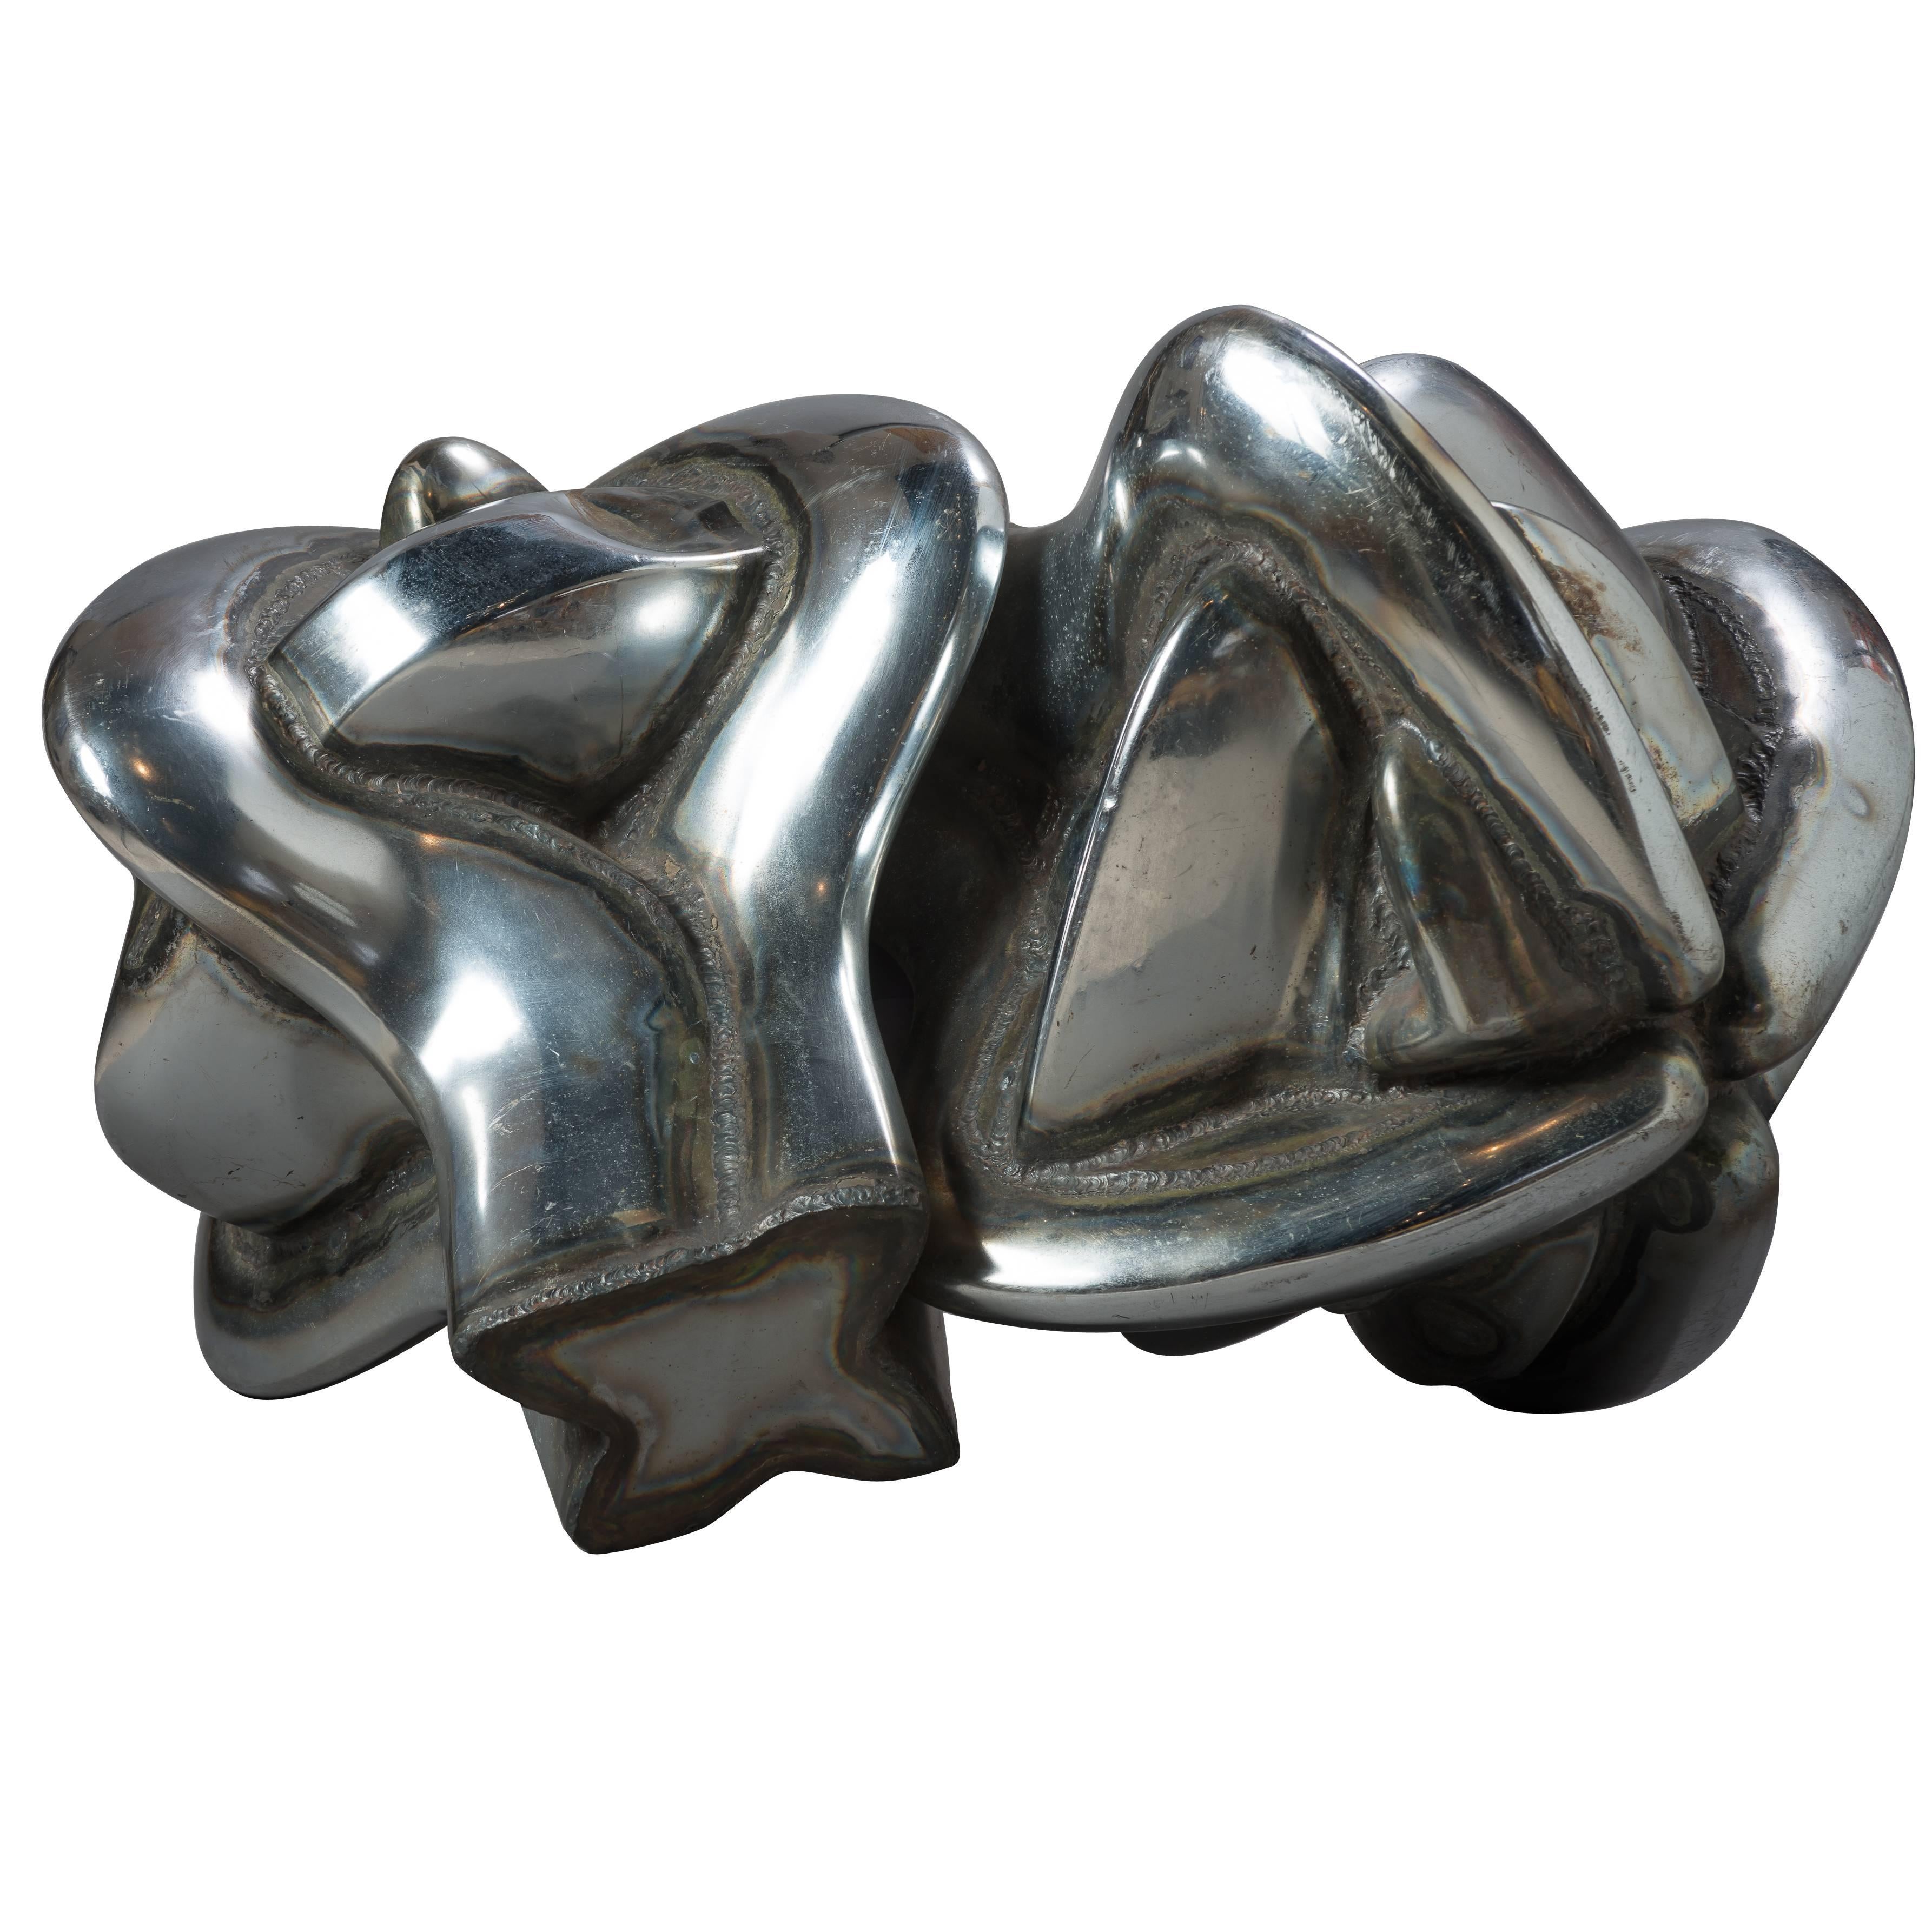 Jason Seley Welded Metal Sculpture For Sale